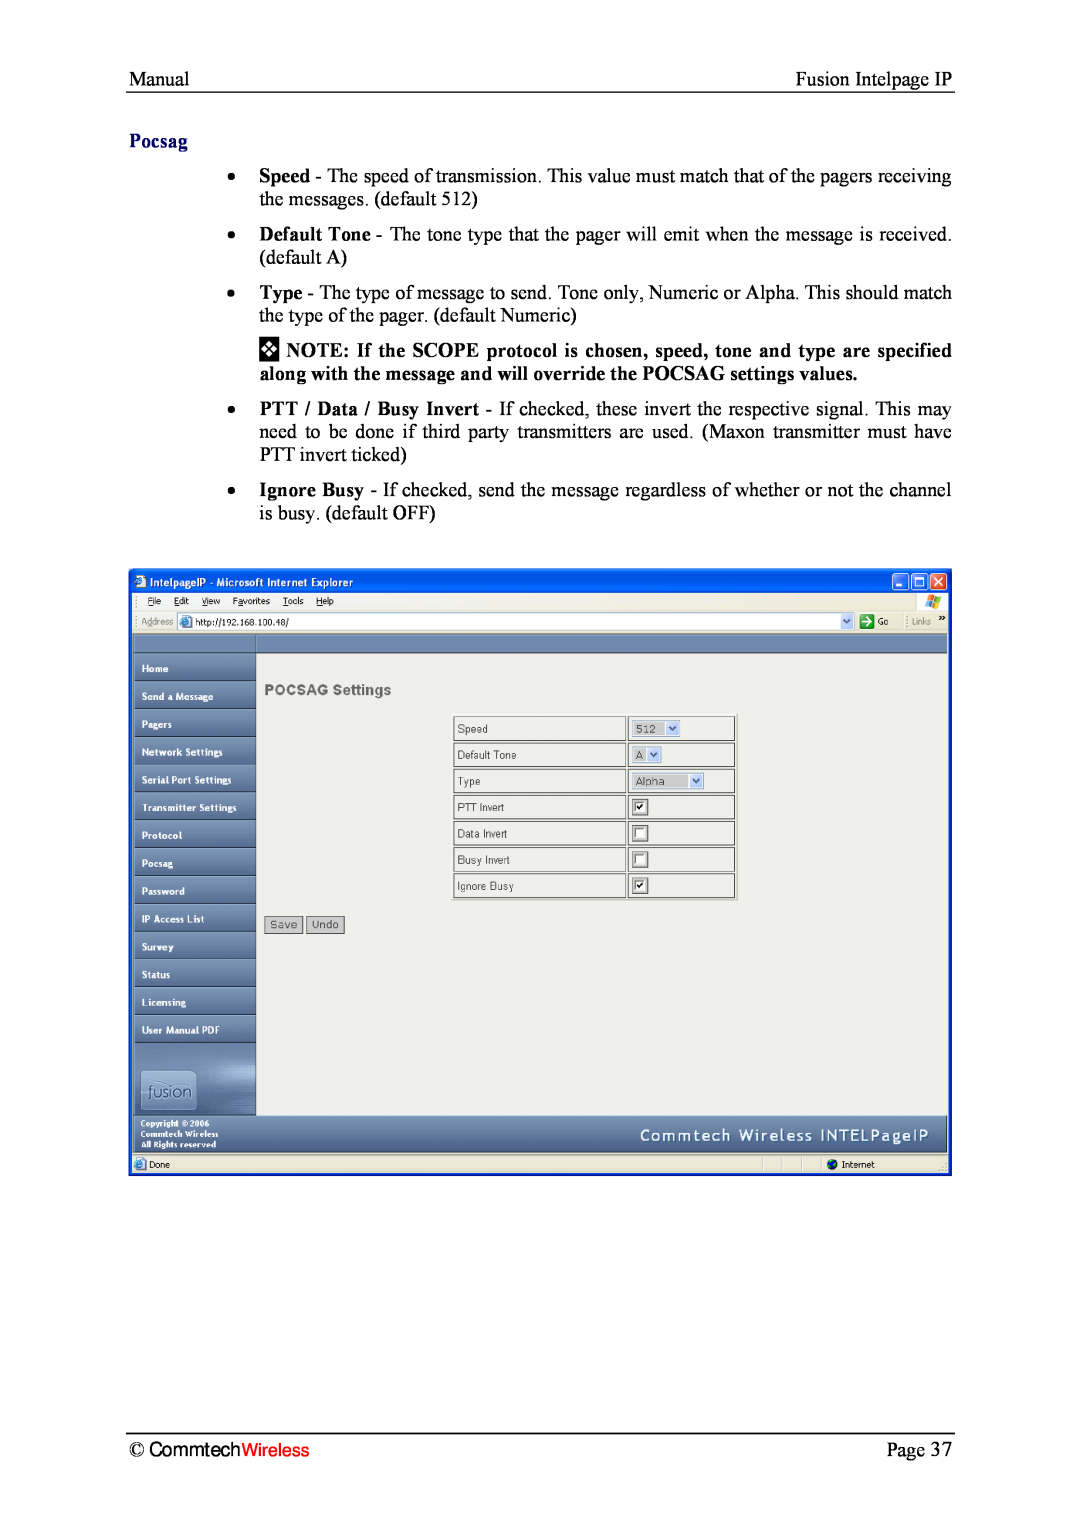 Fusion INTELPage IP 5, 2.1 manual Pocsag, CommtechWireless 